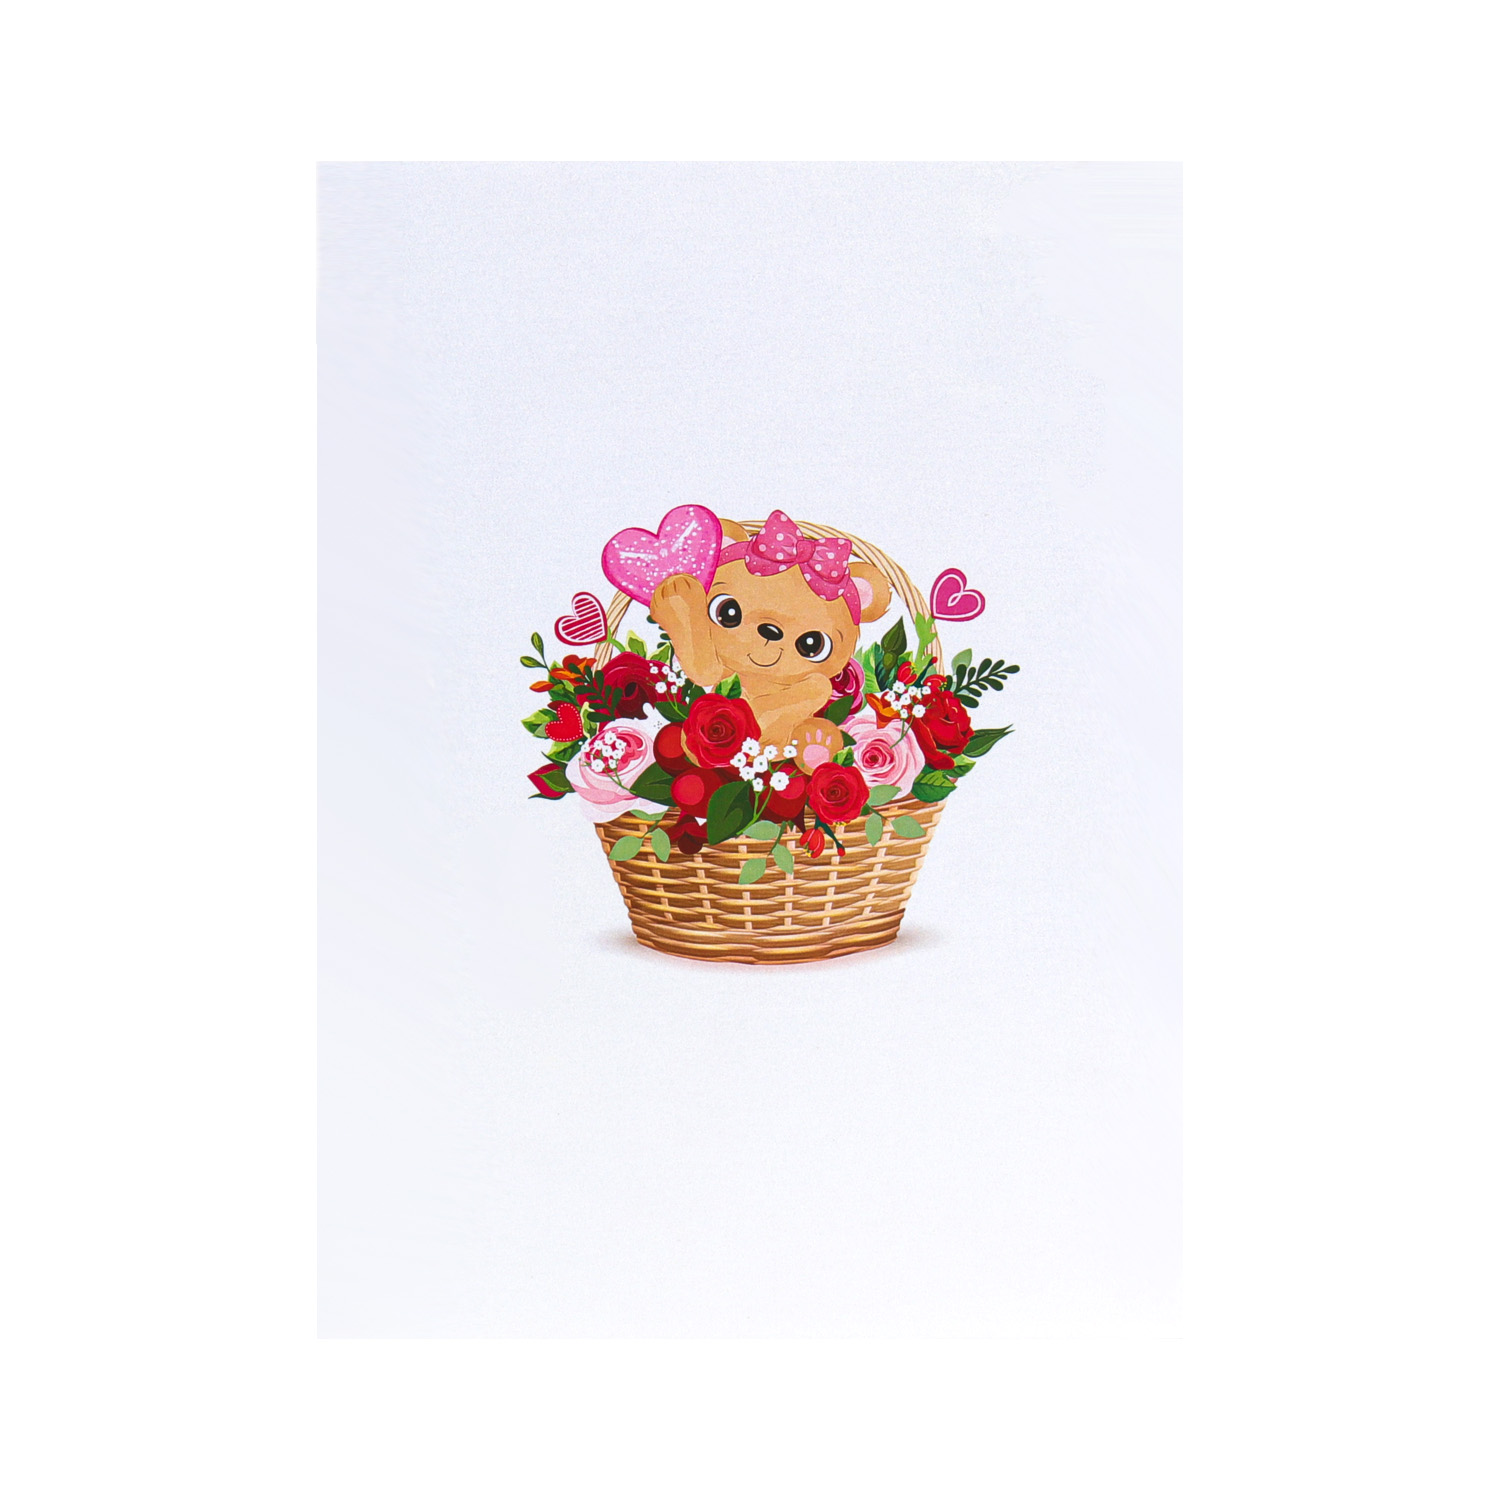 Love-Teddy-Bear-Flowers-Basket-Pop-Up-Card-LV63-cover-pop-up-card-wholesale-manufacturer-valentines-day-pop-up-card-flower-pop-up-card-teddy-3d-pop-up-greeting-card.jpg